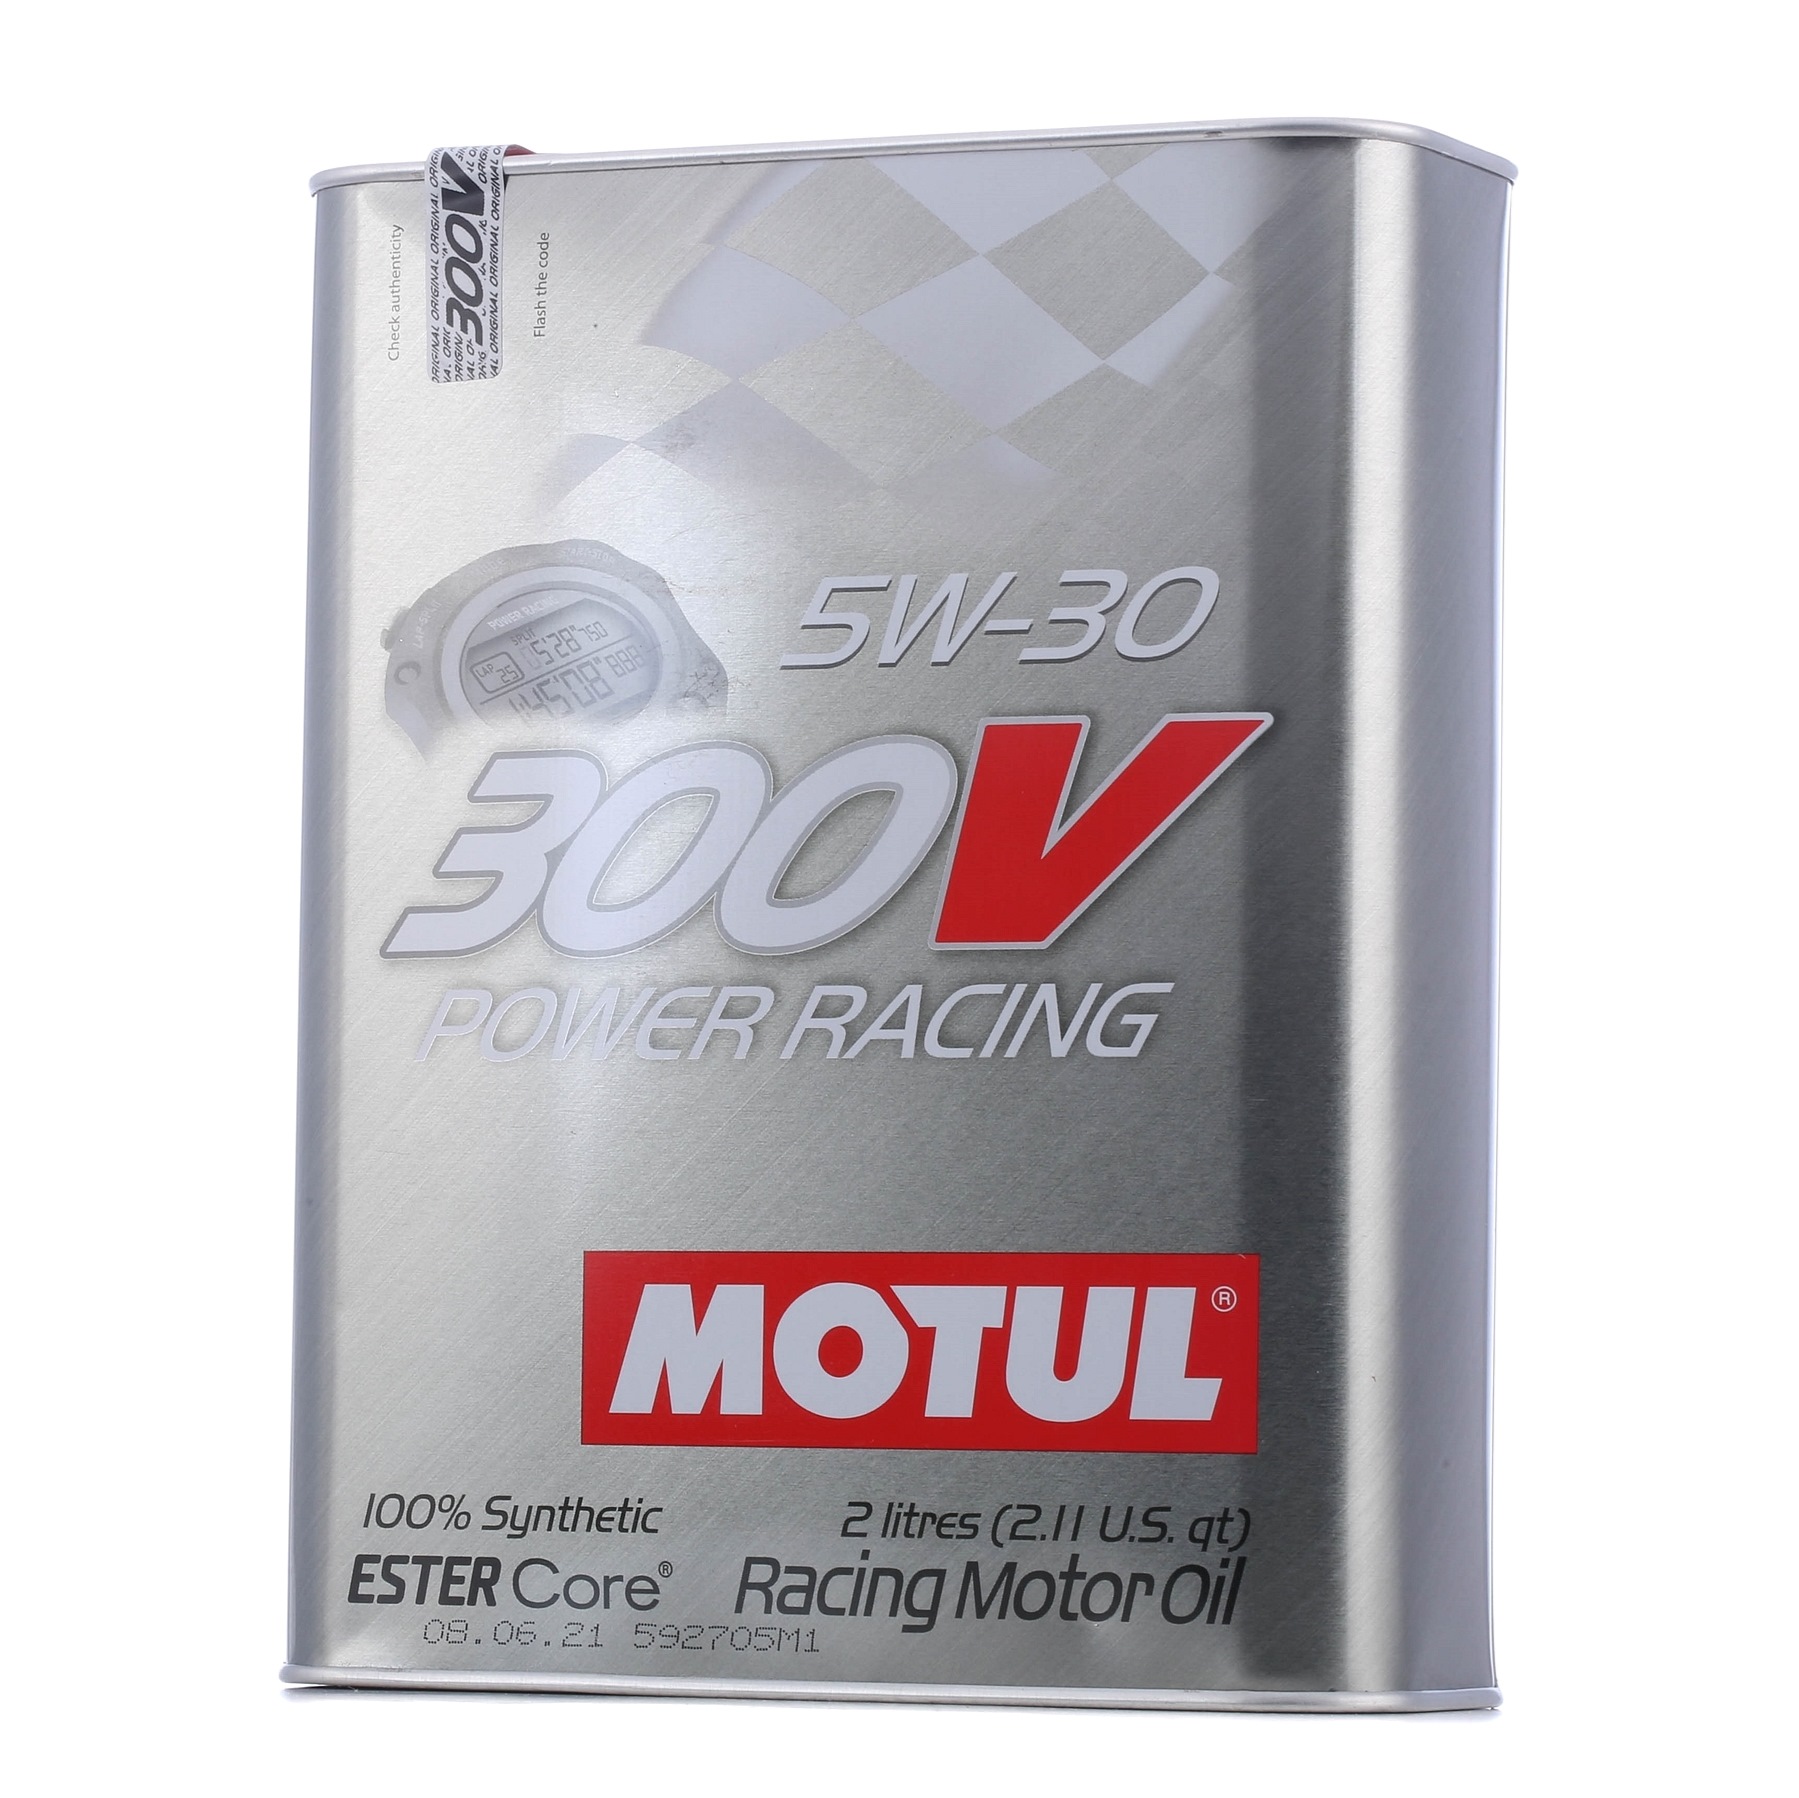 Motul 300V Power Racing - 5W-30 - 2L